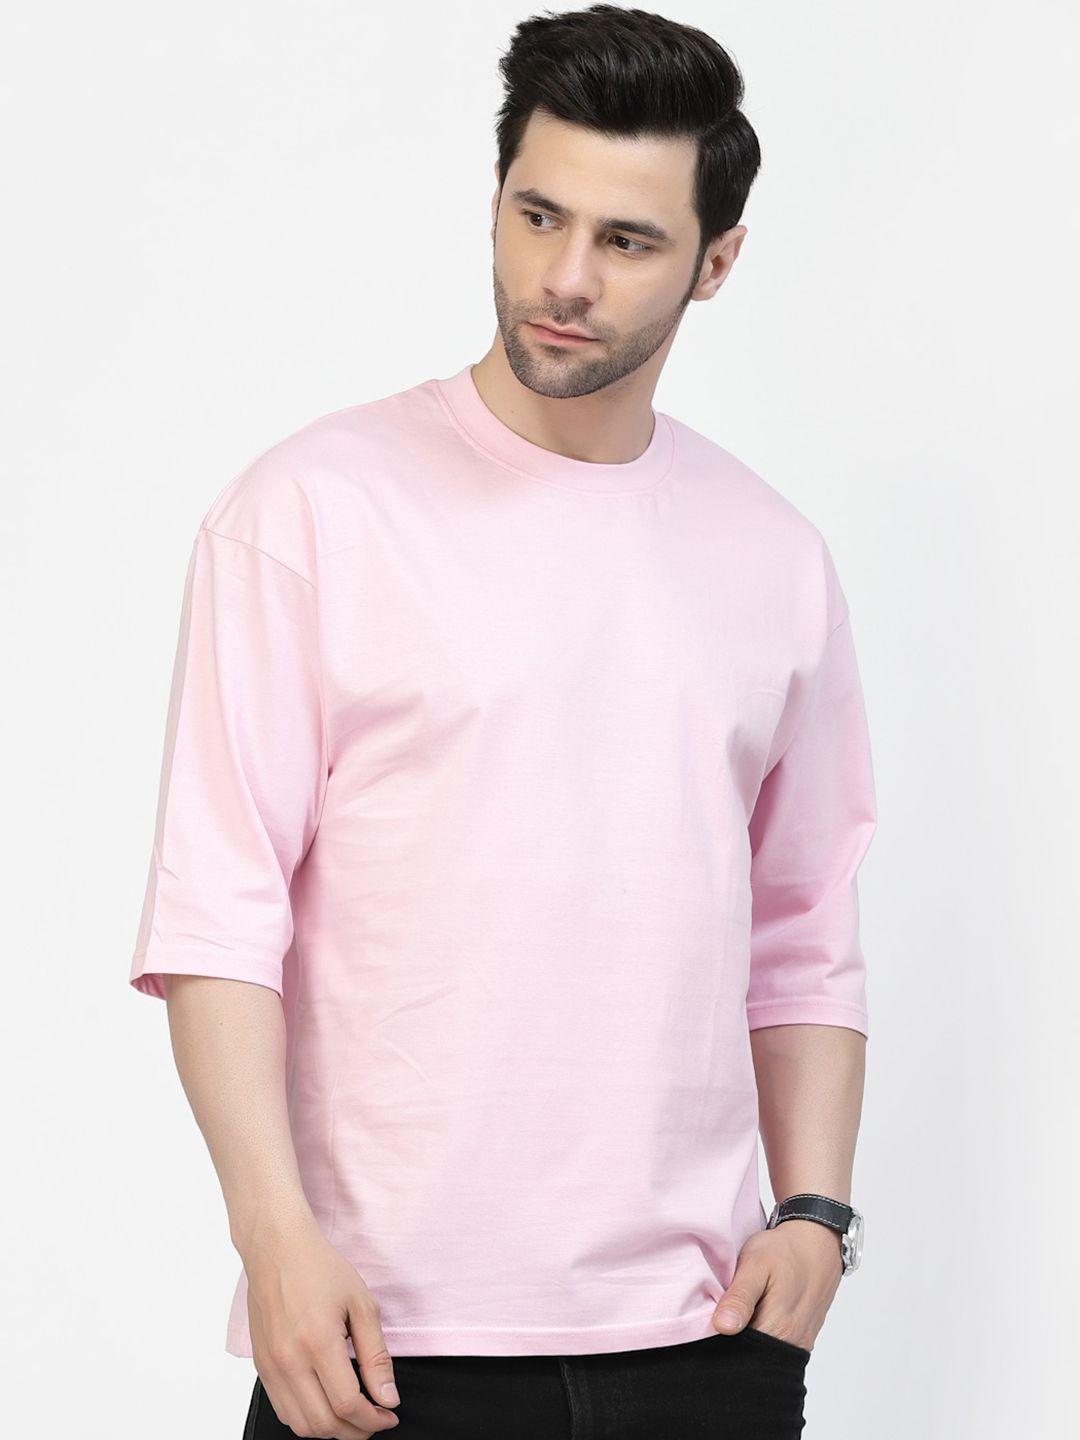 gavin paris unisex pink pockets t-shirt